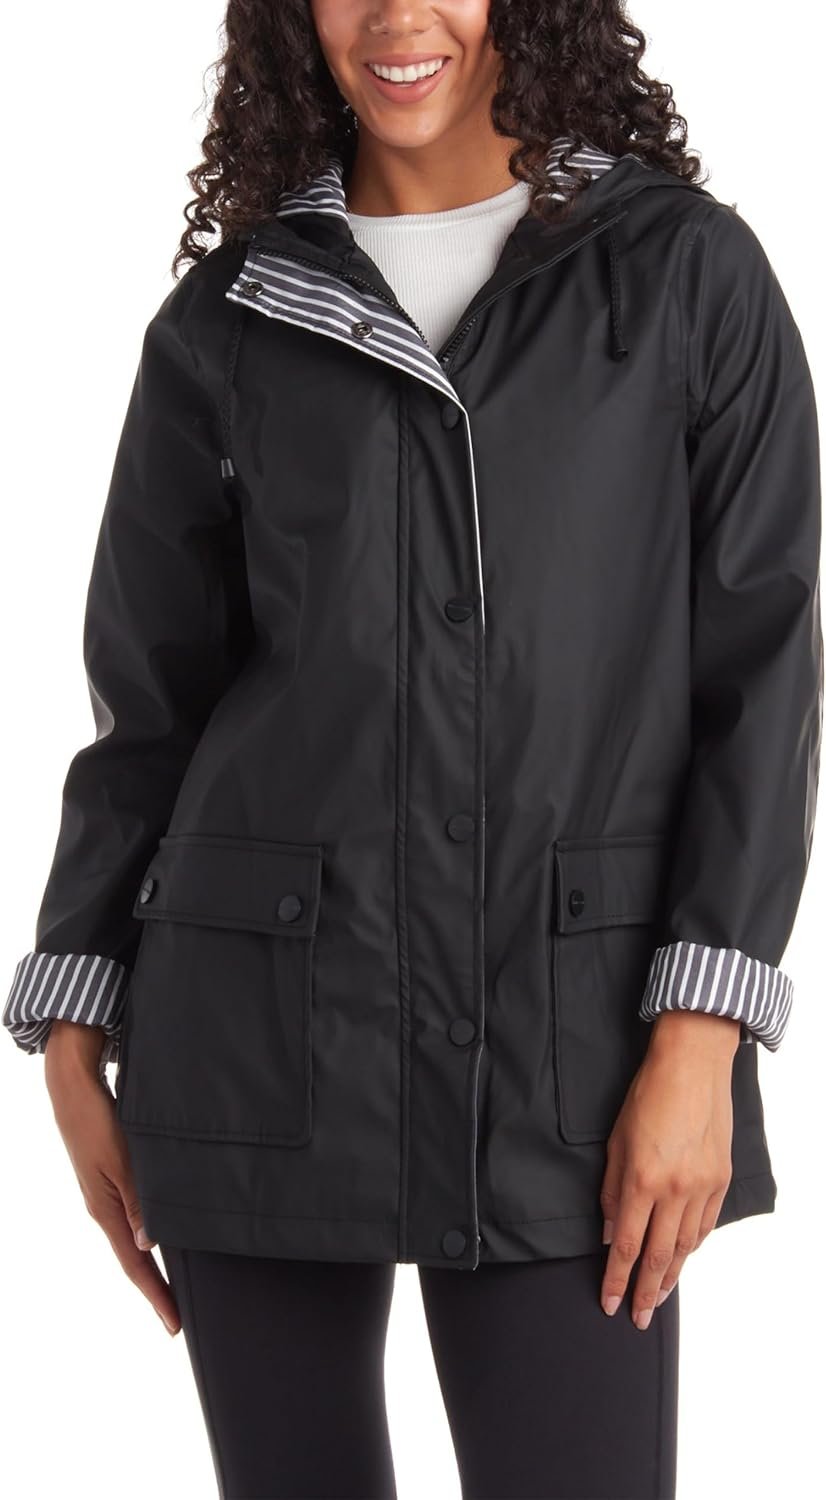 URBAN REPUBLIC Woman’s Raincoat – Water Resistant Slicker Shell Windbreaker Rain Jacket (S-3XL)